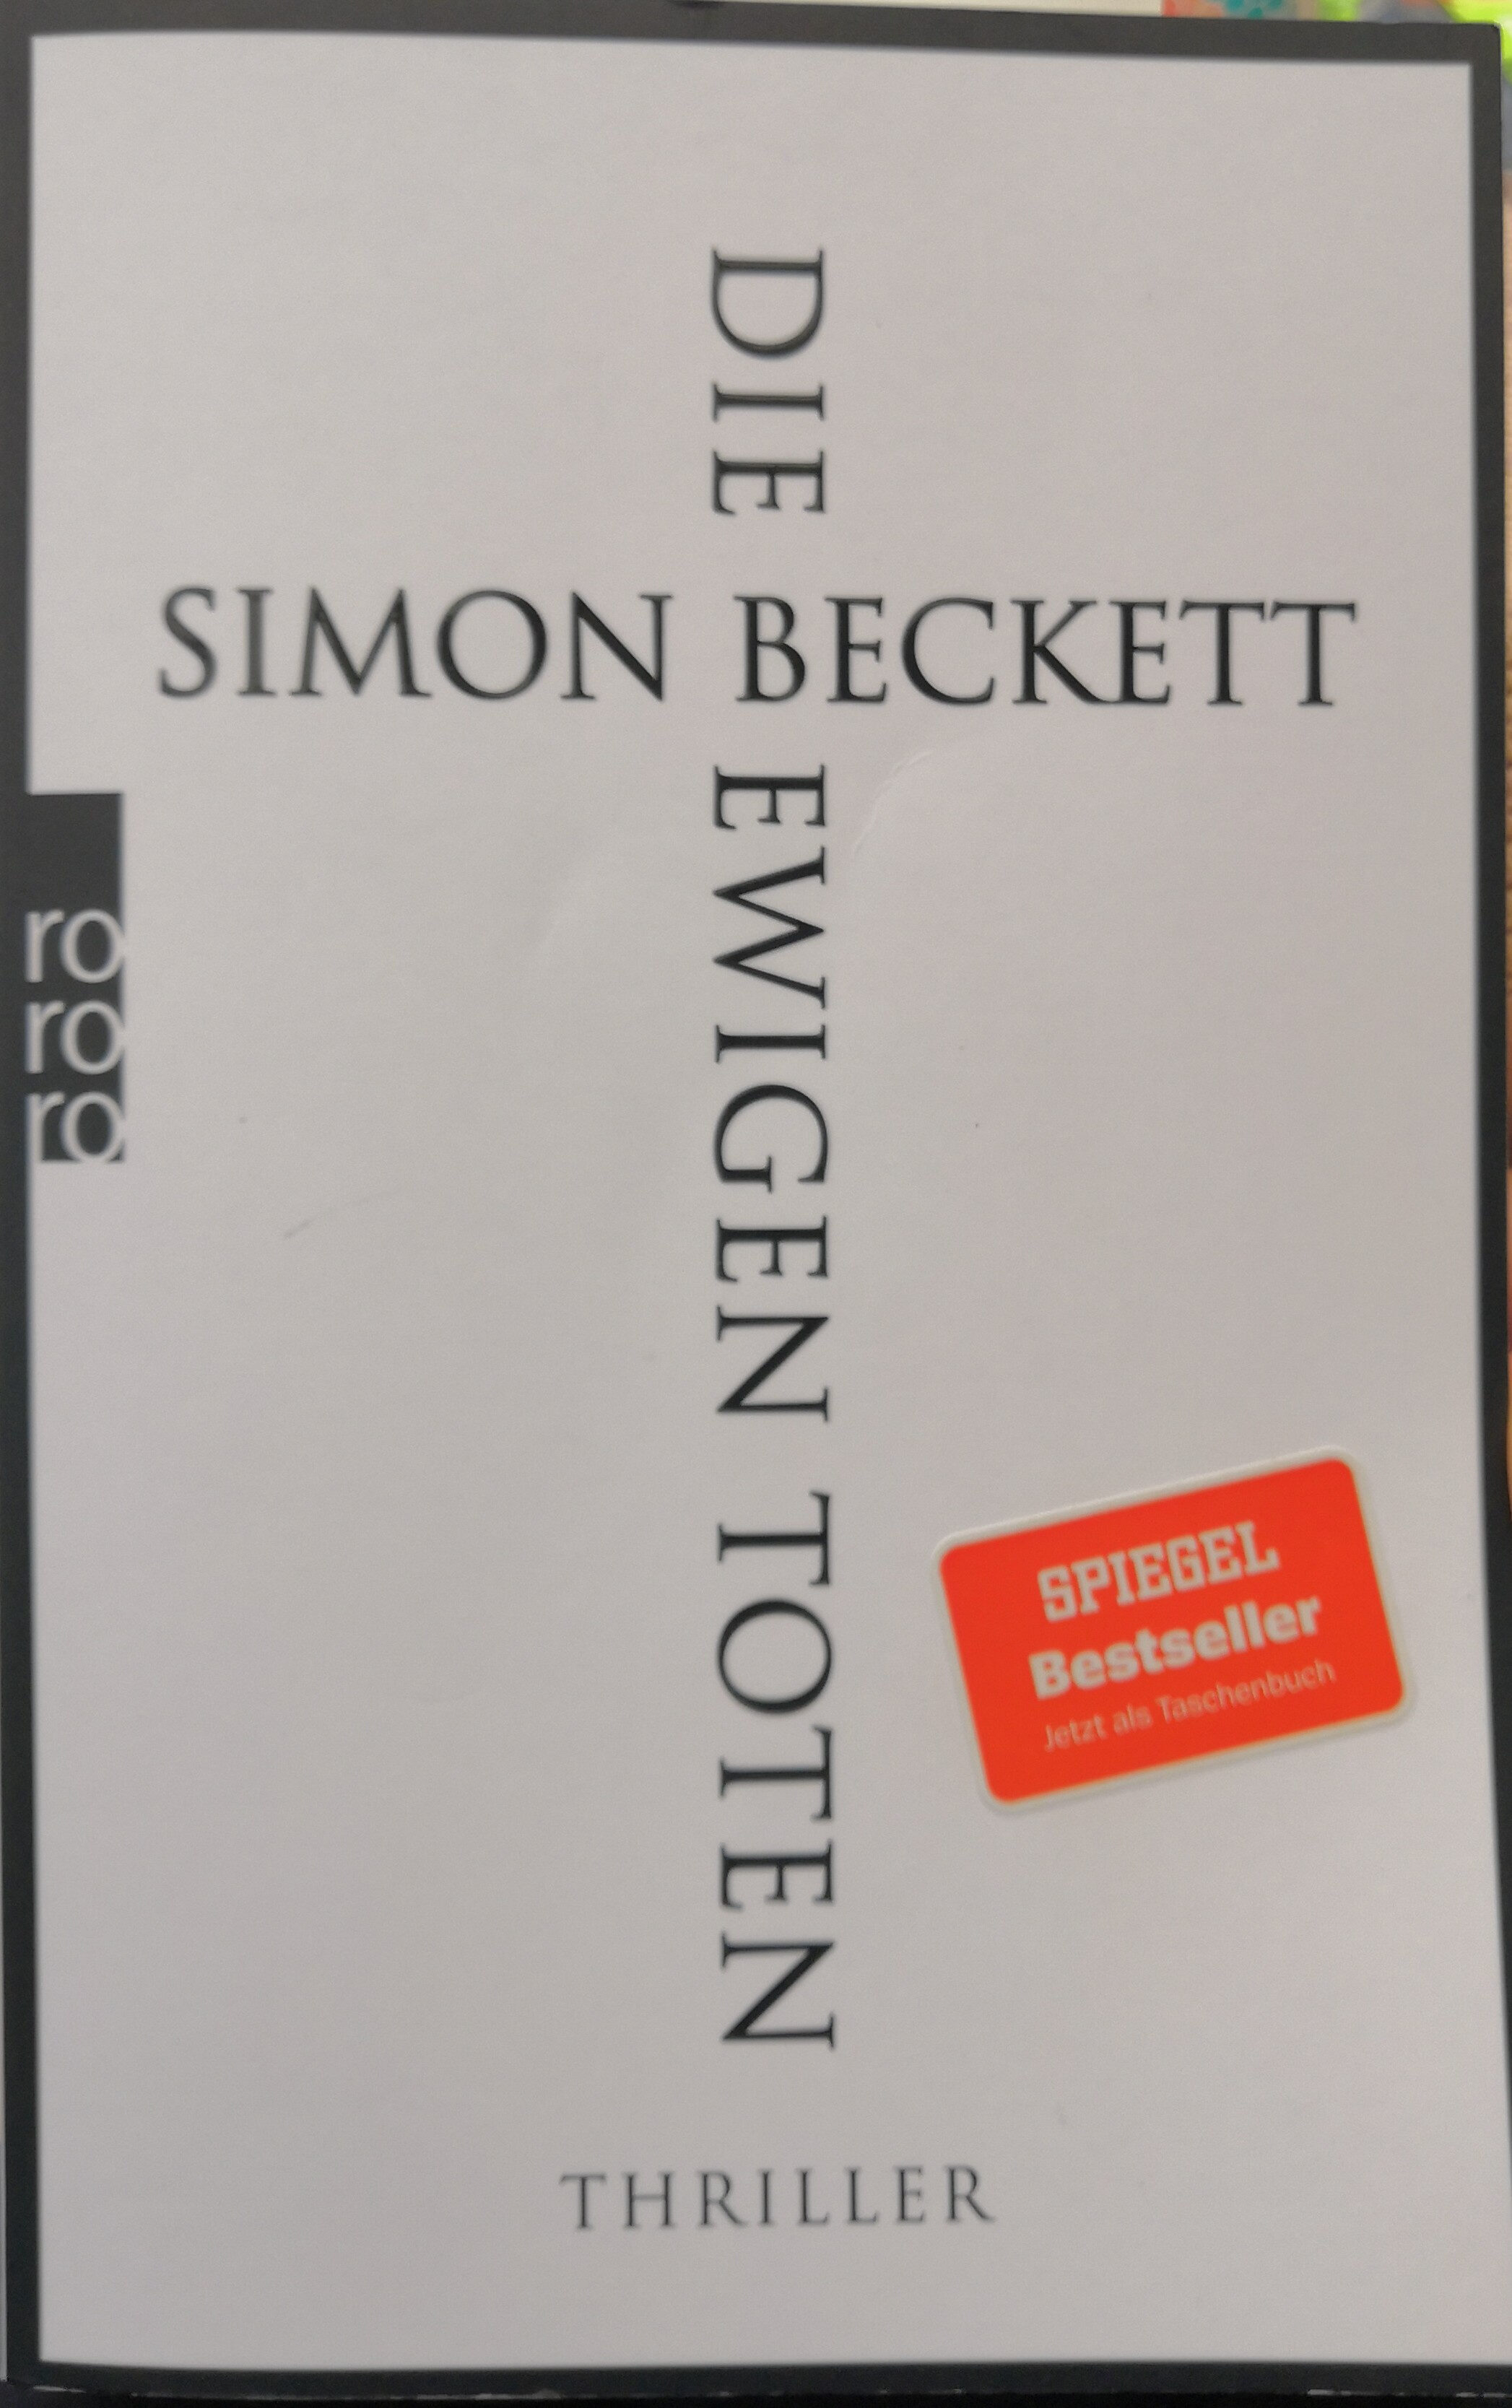 Simon Beckett - Die ewigen Toten - Product - de